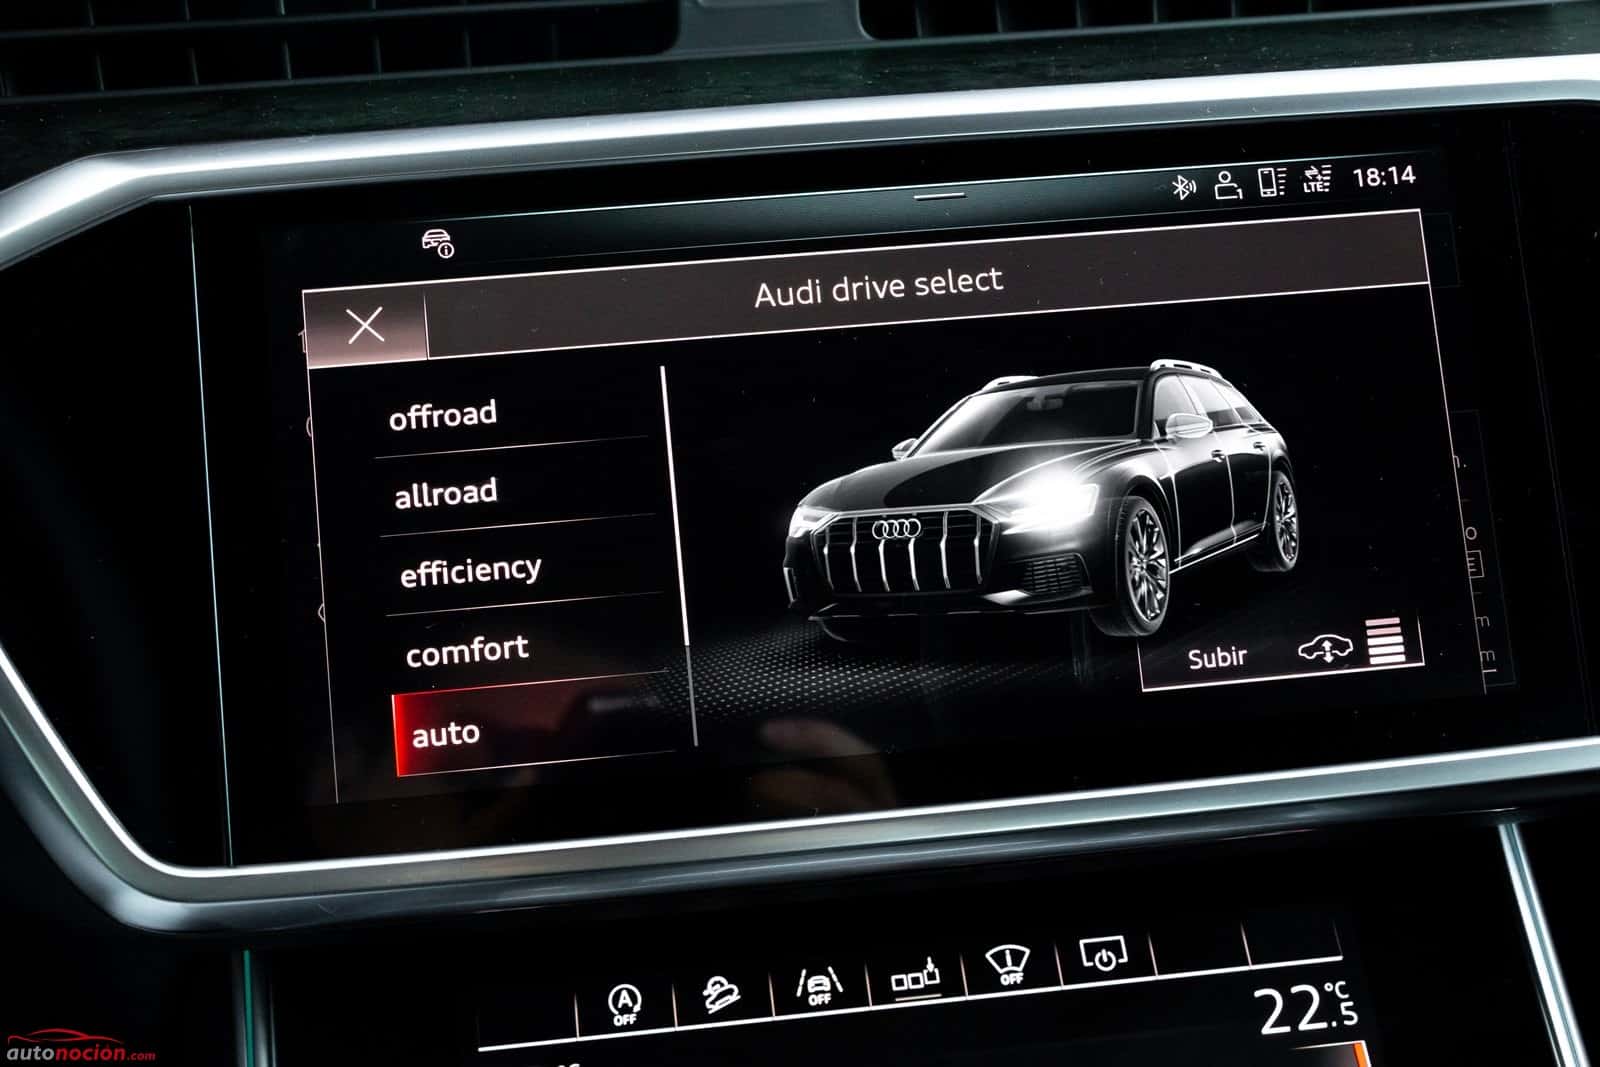 https://www.autonocion.com/wp-content/uploads/2020/04/Prueba-Audi-A6-allroad-quattro-45-TDI-tiptronic-2020-74.jpg